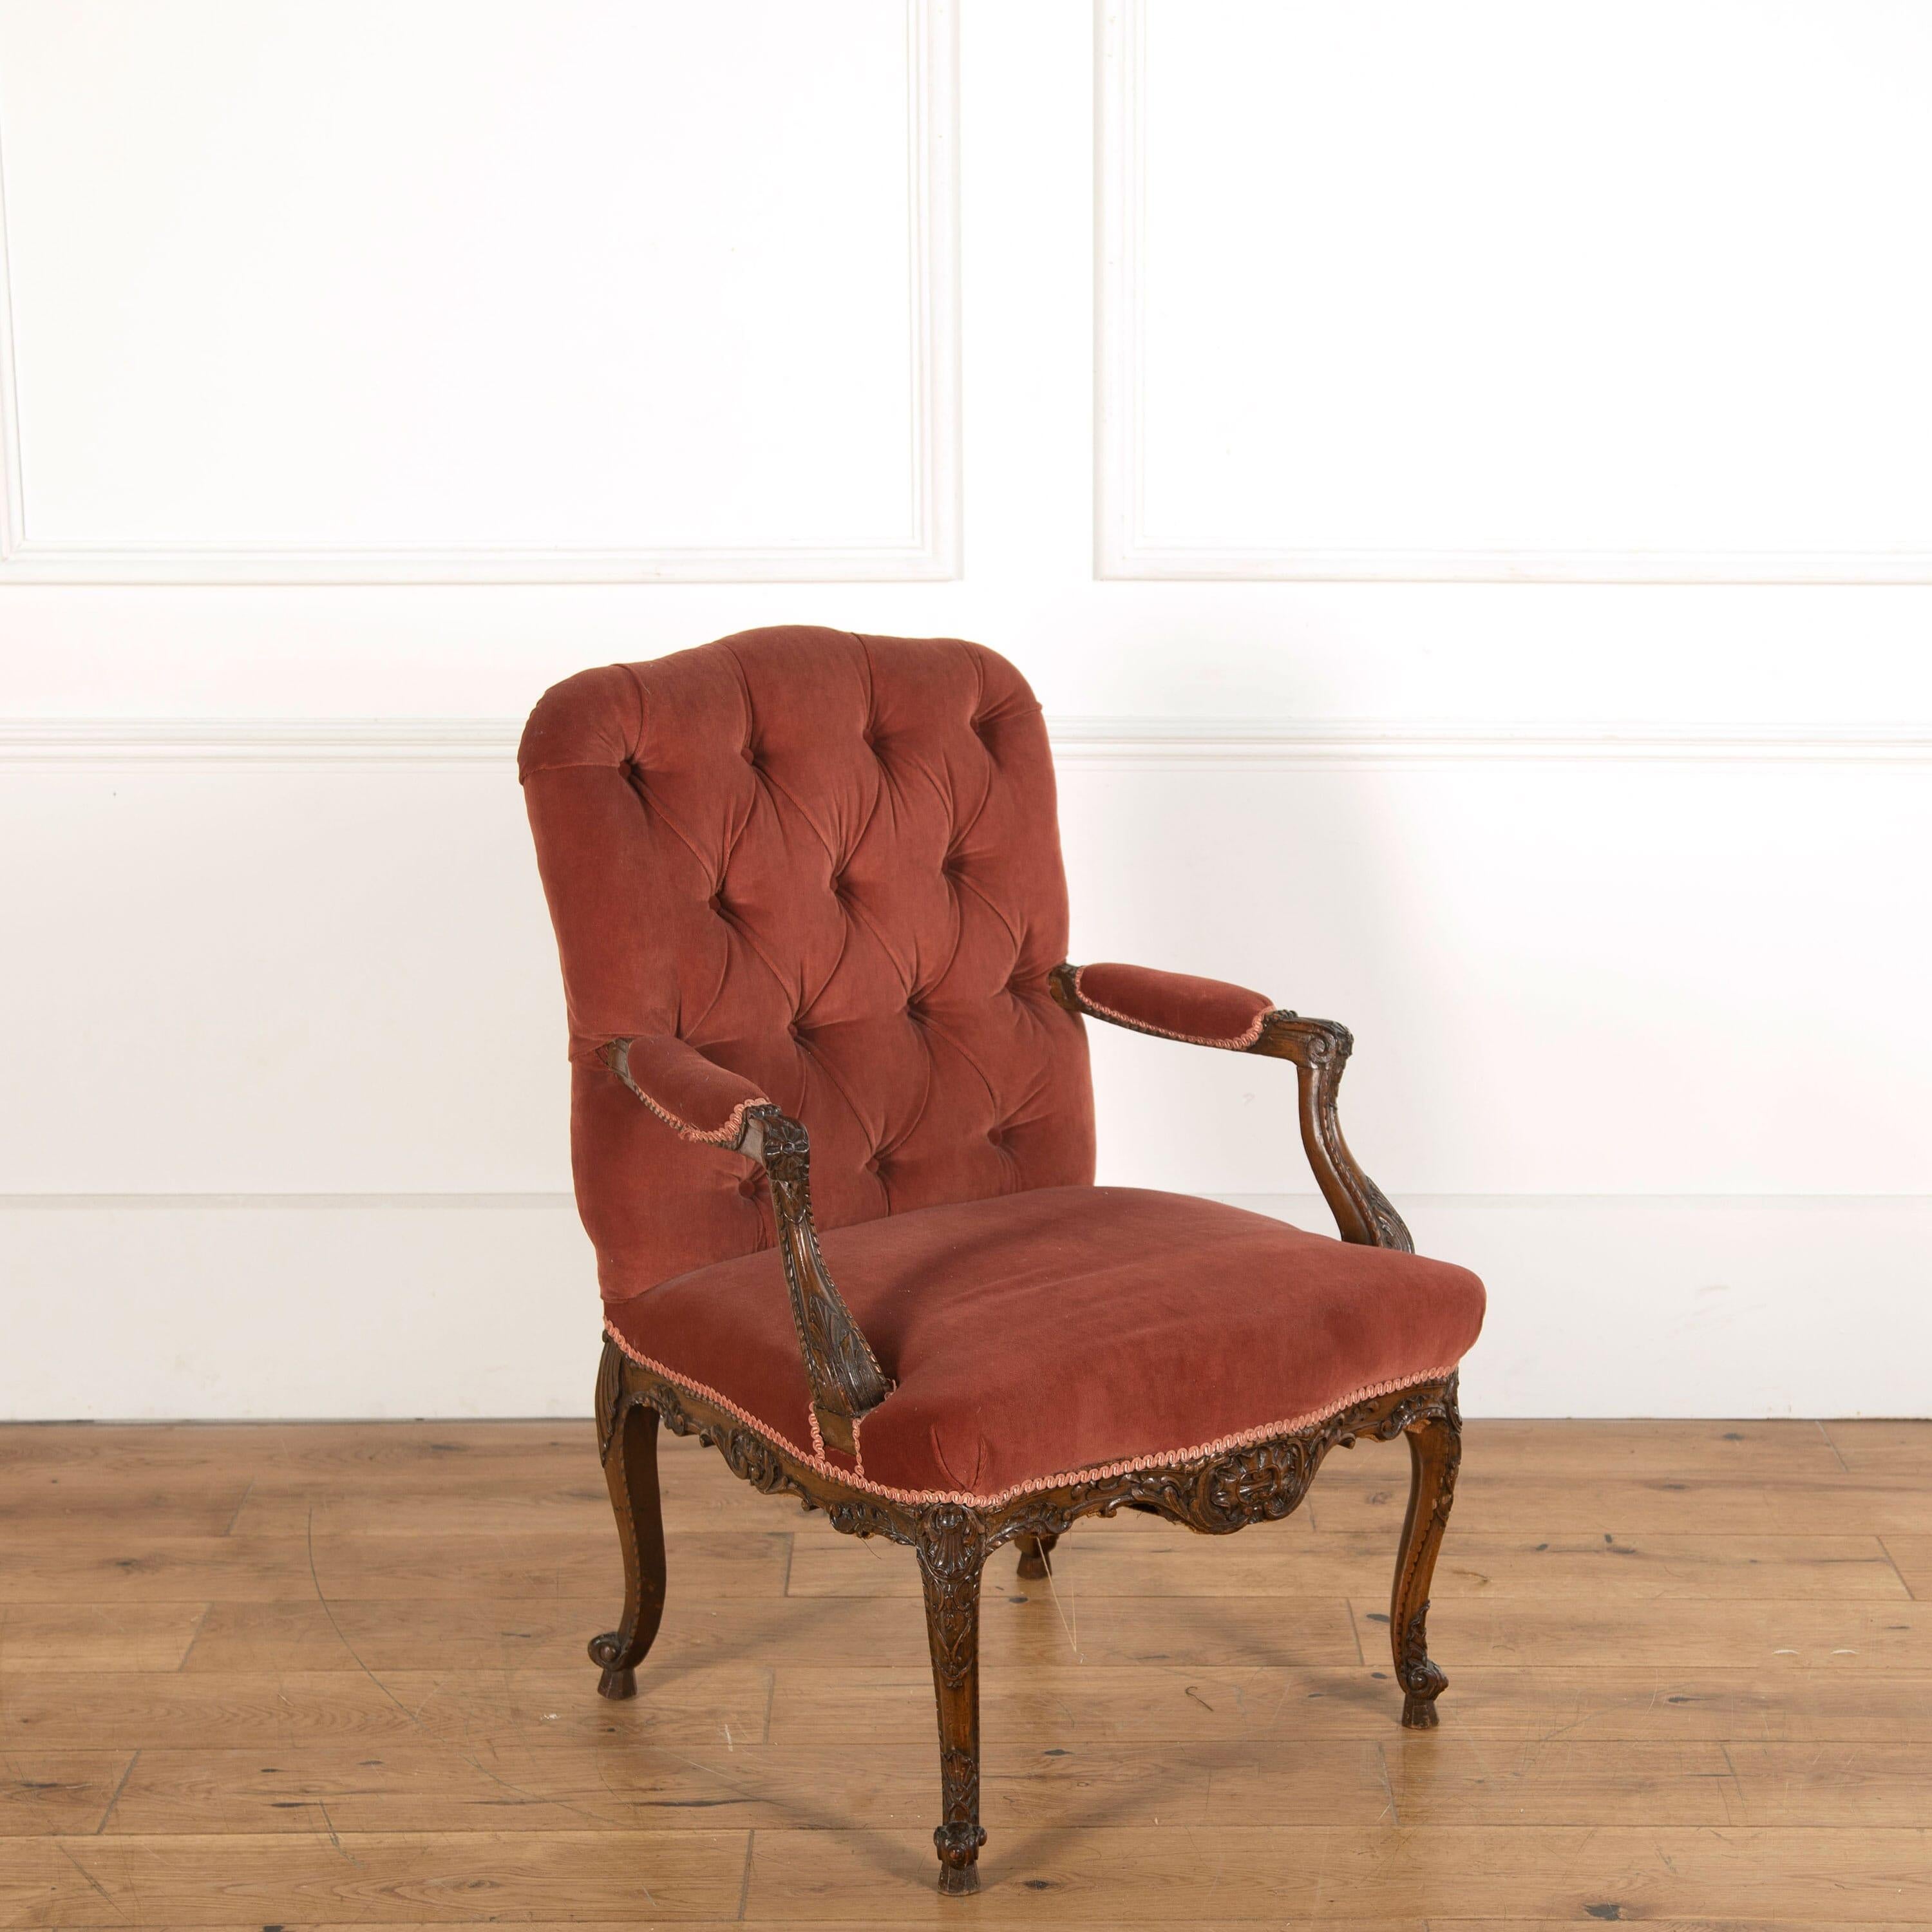 French 19th century walnut armchair.